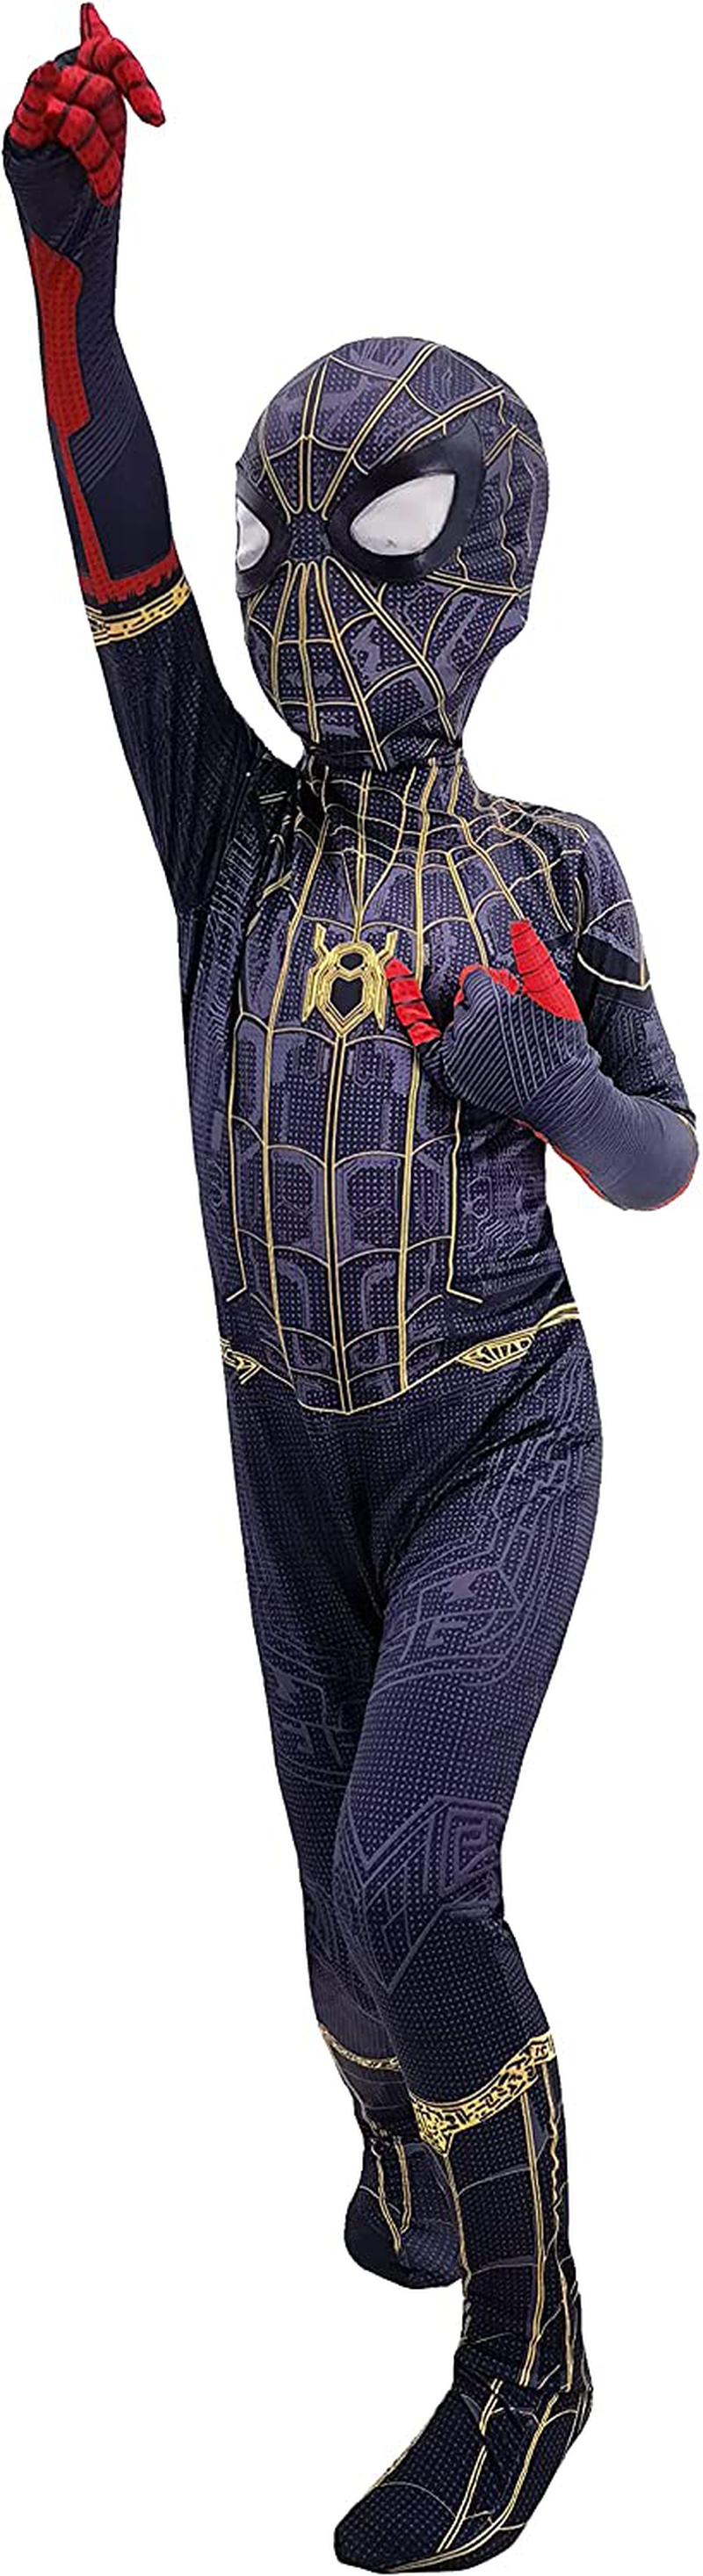 Superhero Spider No Way Home Costume for Kids Boys Halloween Cosplay Zentai Bodysuit Apparel & Accessories > Costumes & Accessories > Costumes ugoccam   